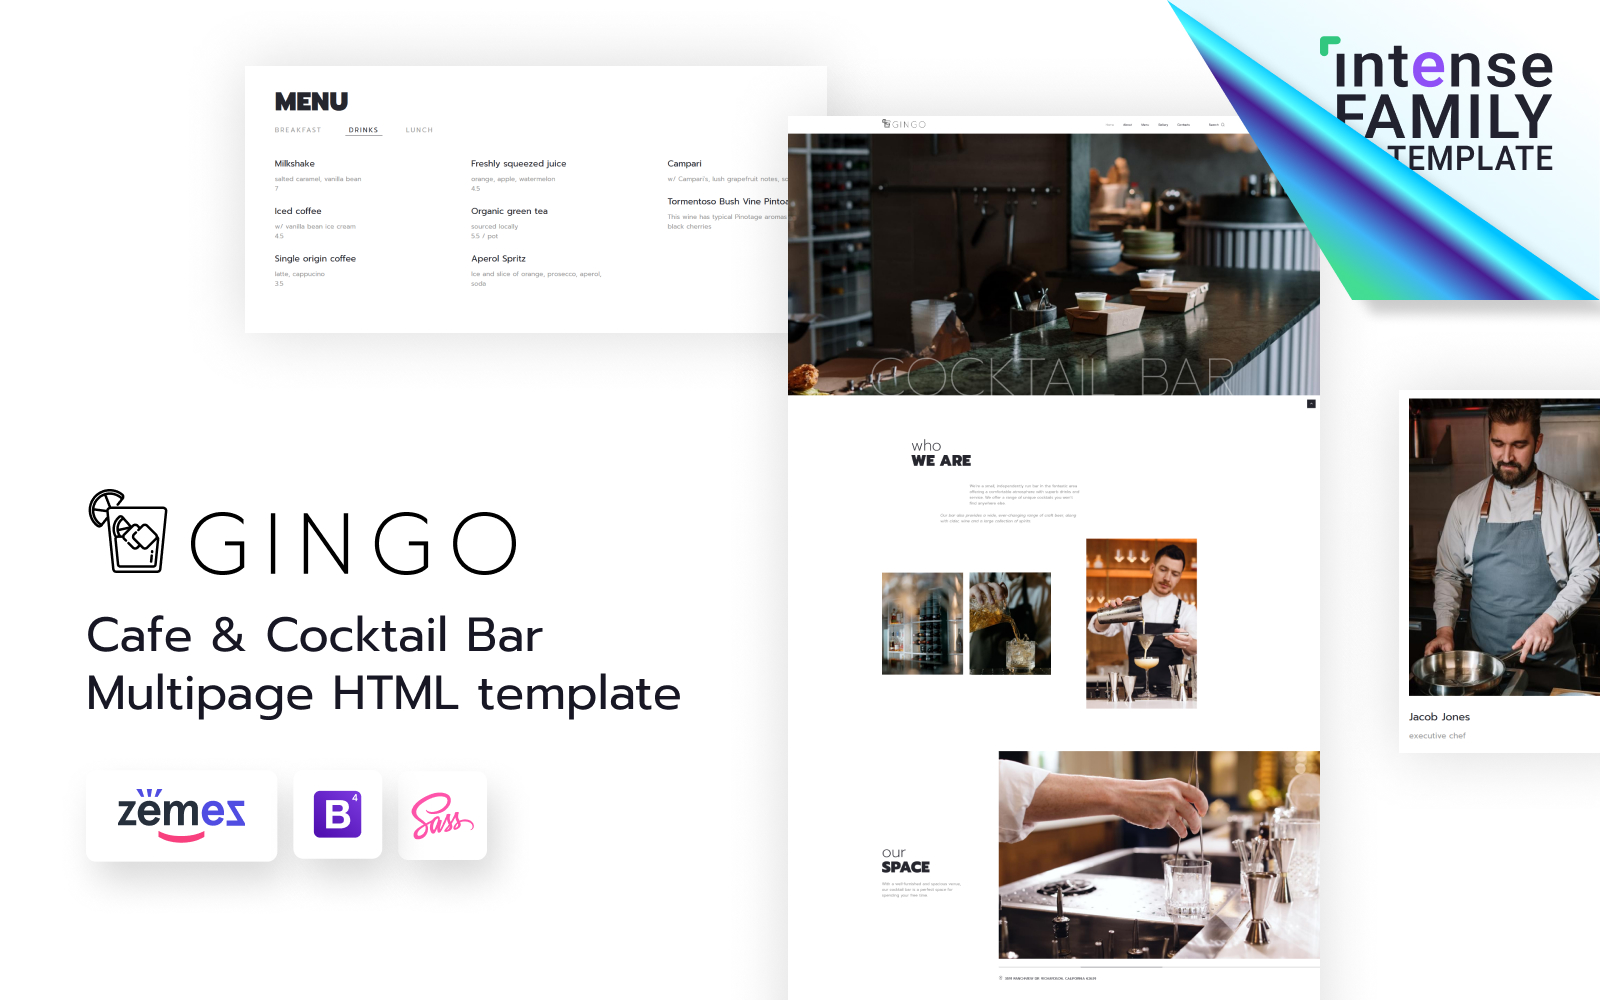 Gingo - Cocktail Bar Website Template